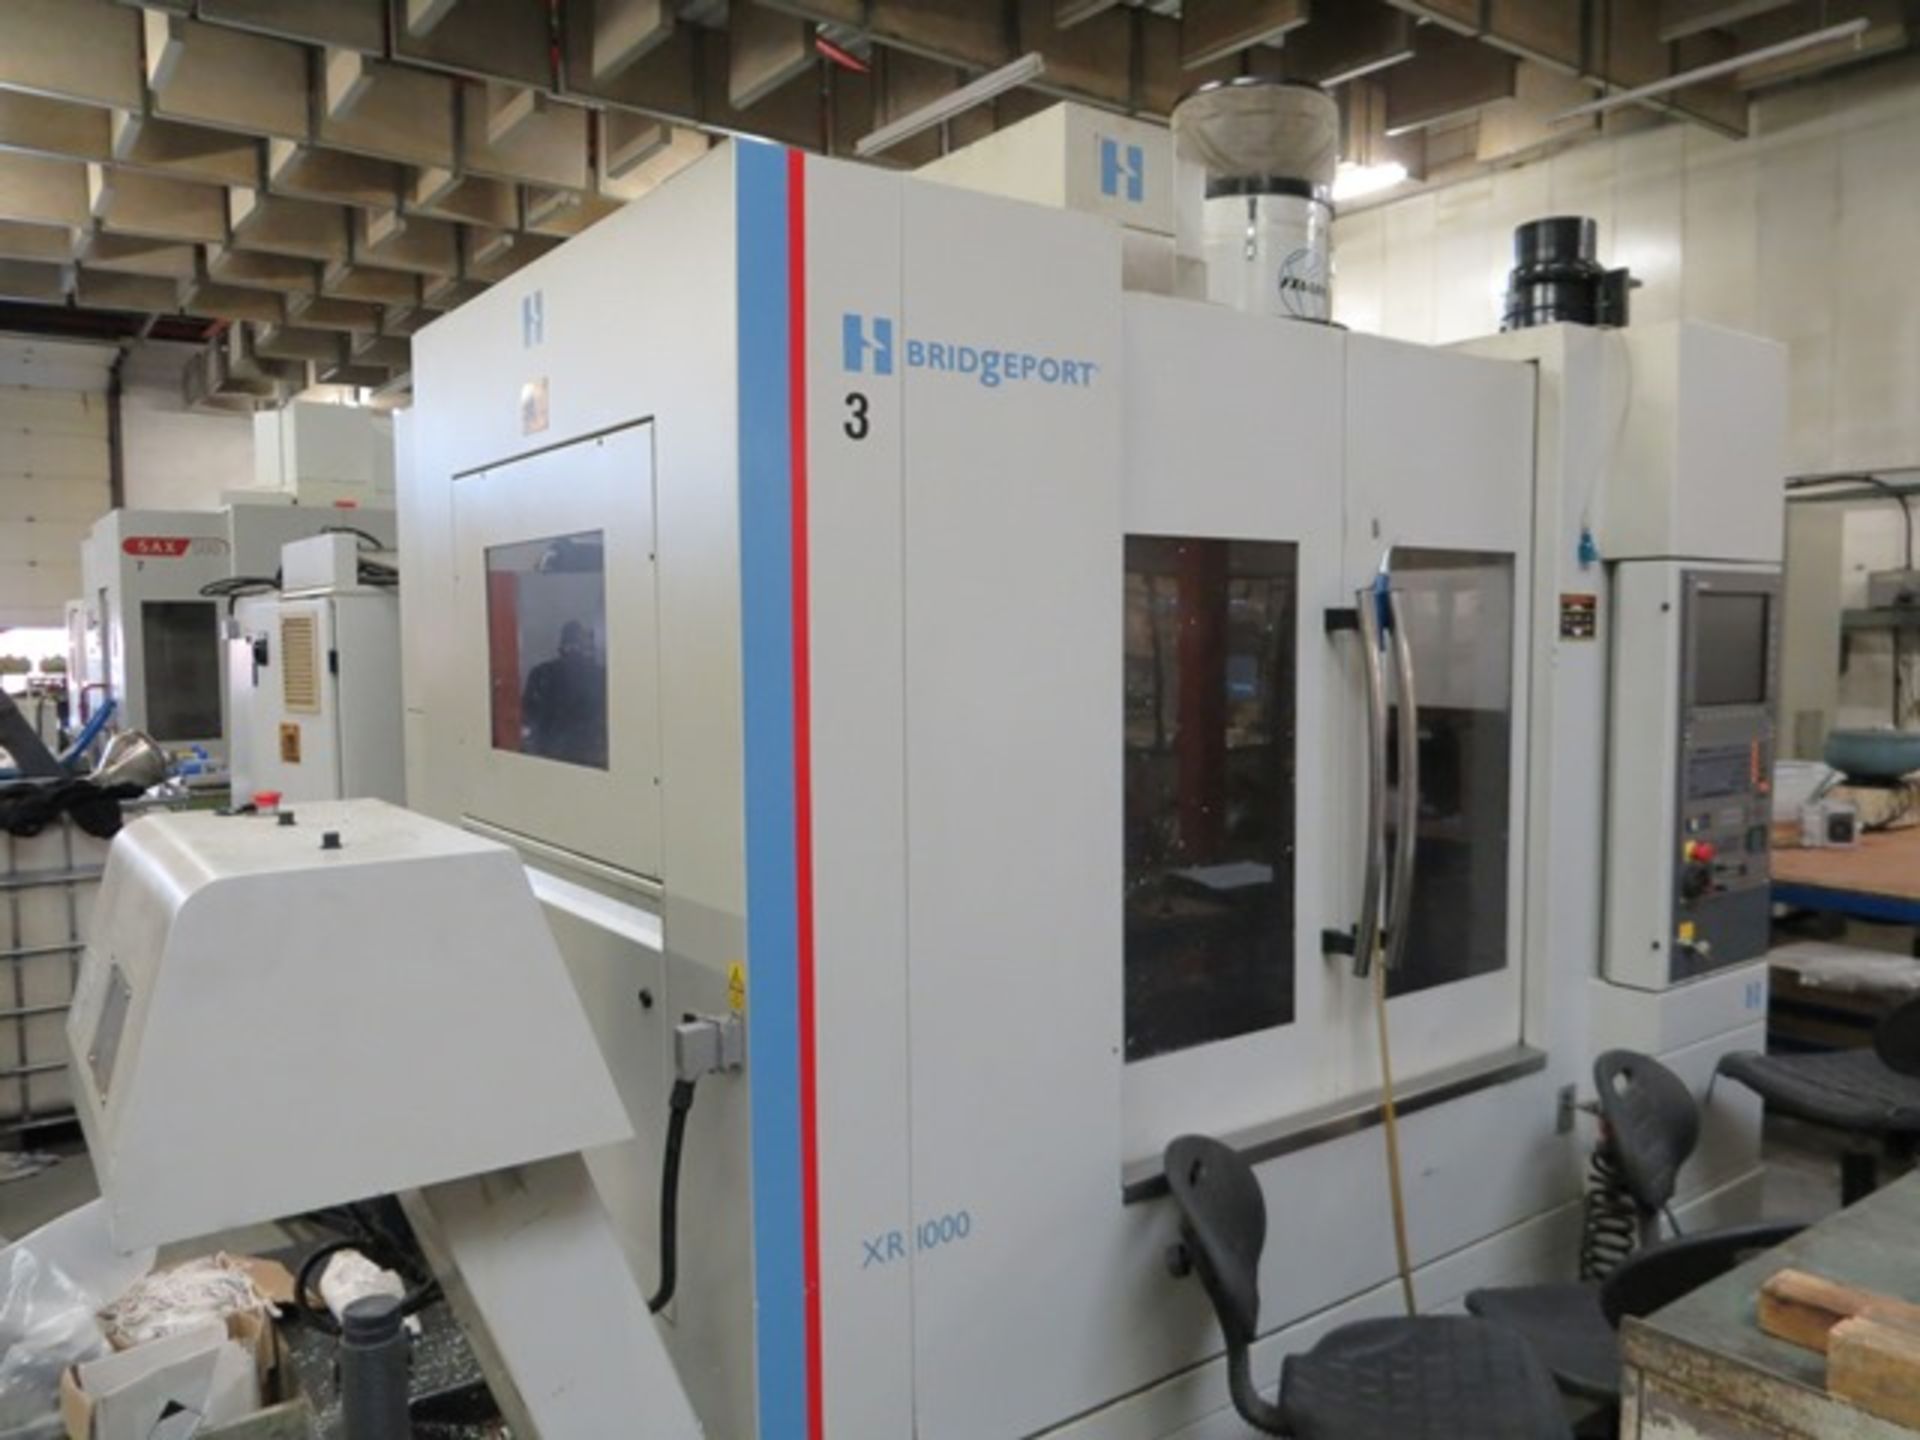 Hardinge Bridgeport XR 1000 CNC vertical machining centre with Heidenhain control, residue discharge